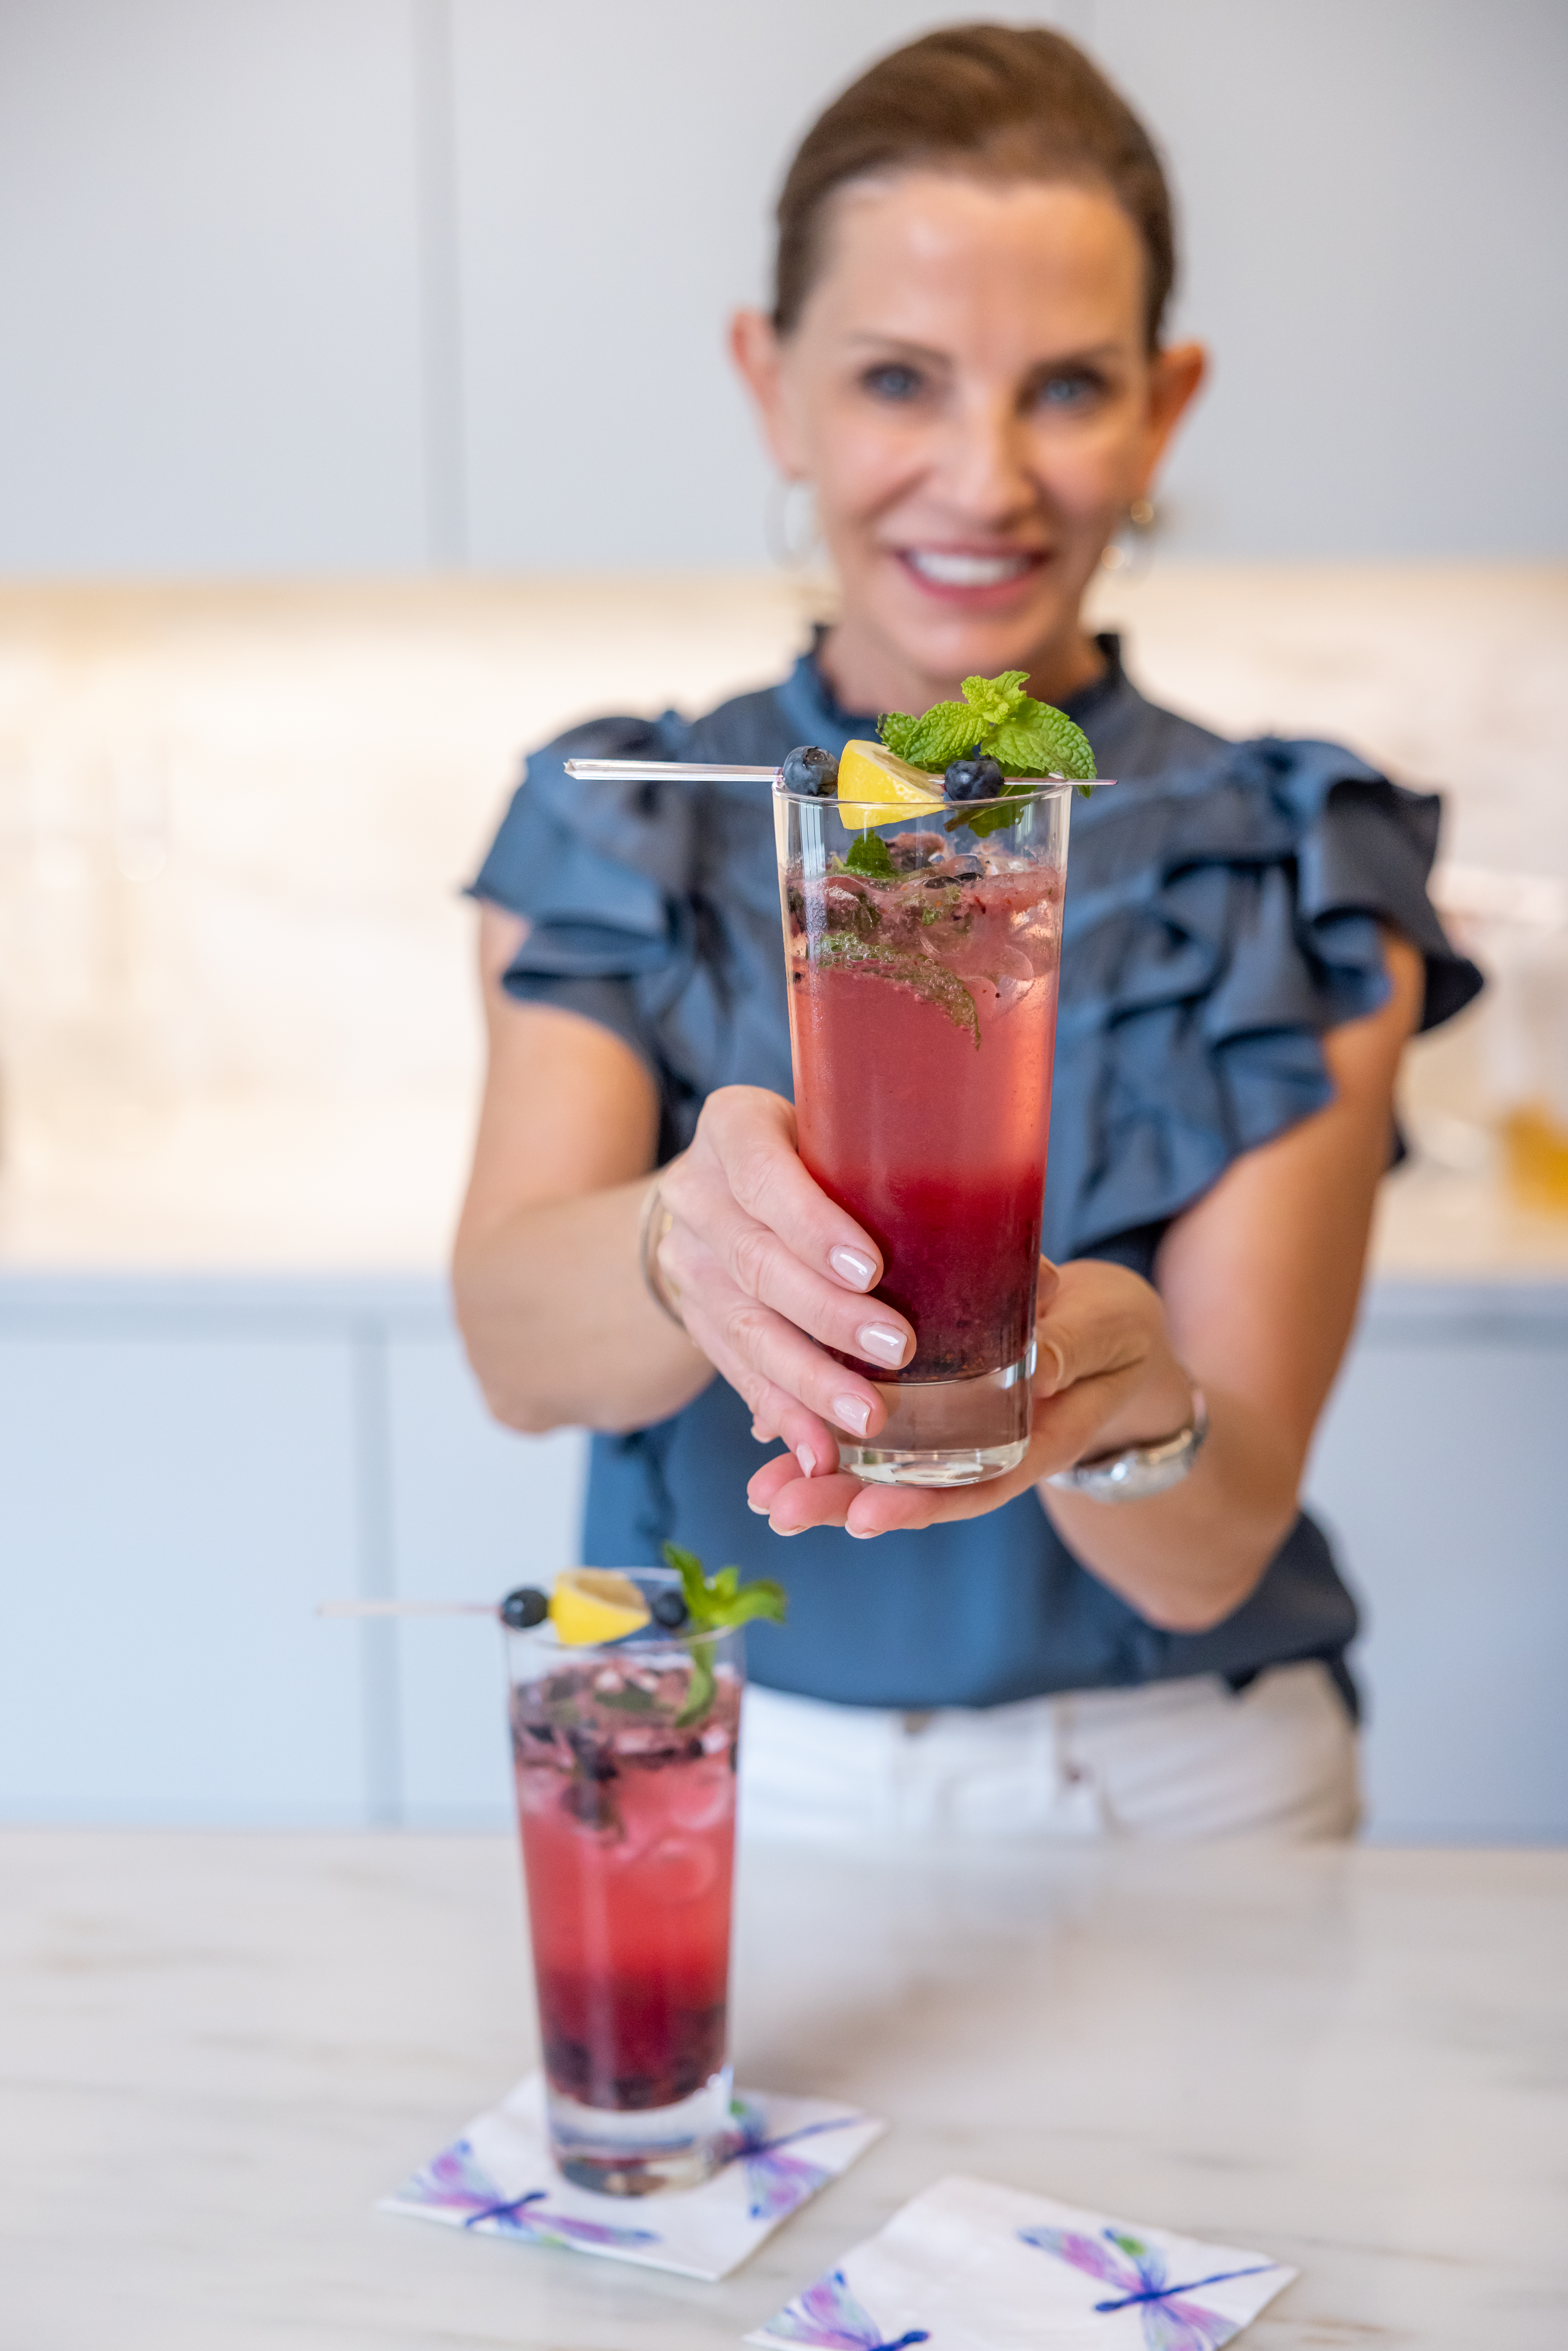 Blueberry Smash, Summer cocktail recipe, Cocktail Recipe